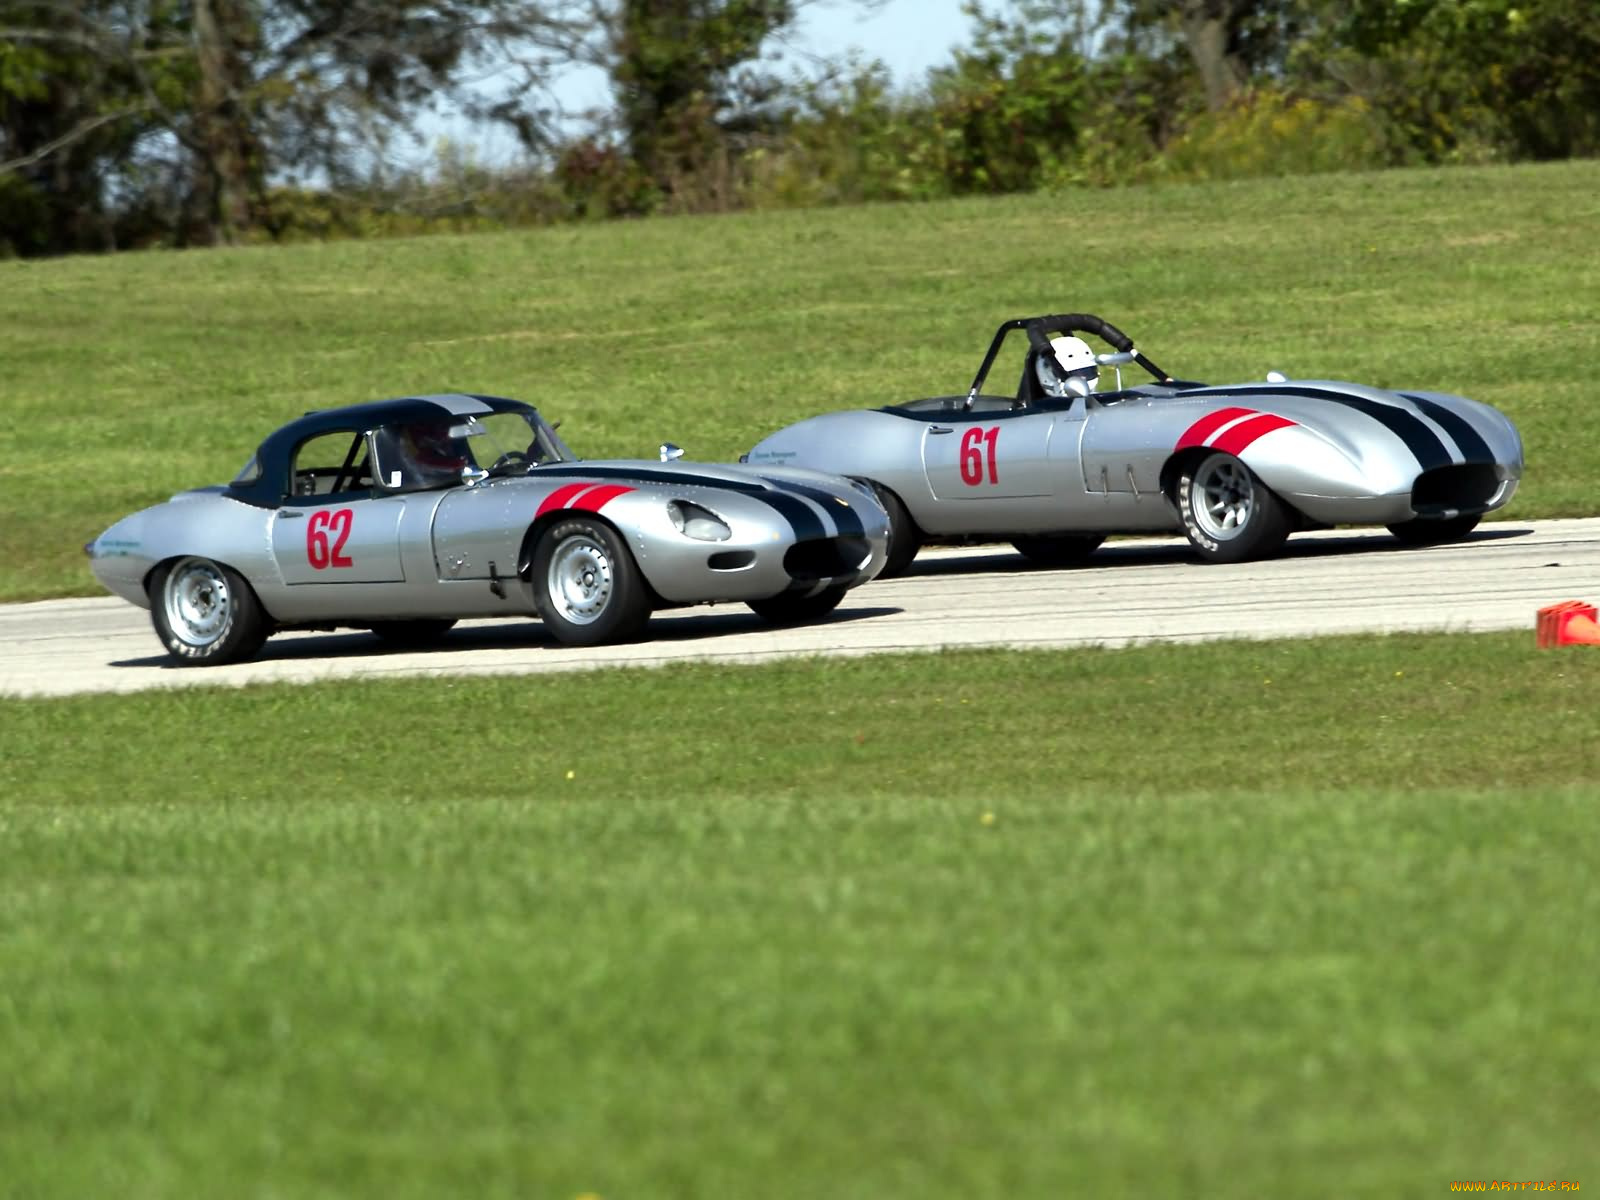 jaguar, select, edition, type, roadster, 61, 1967, 2004, season, автомобили